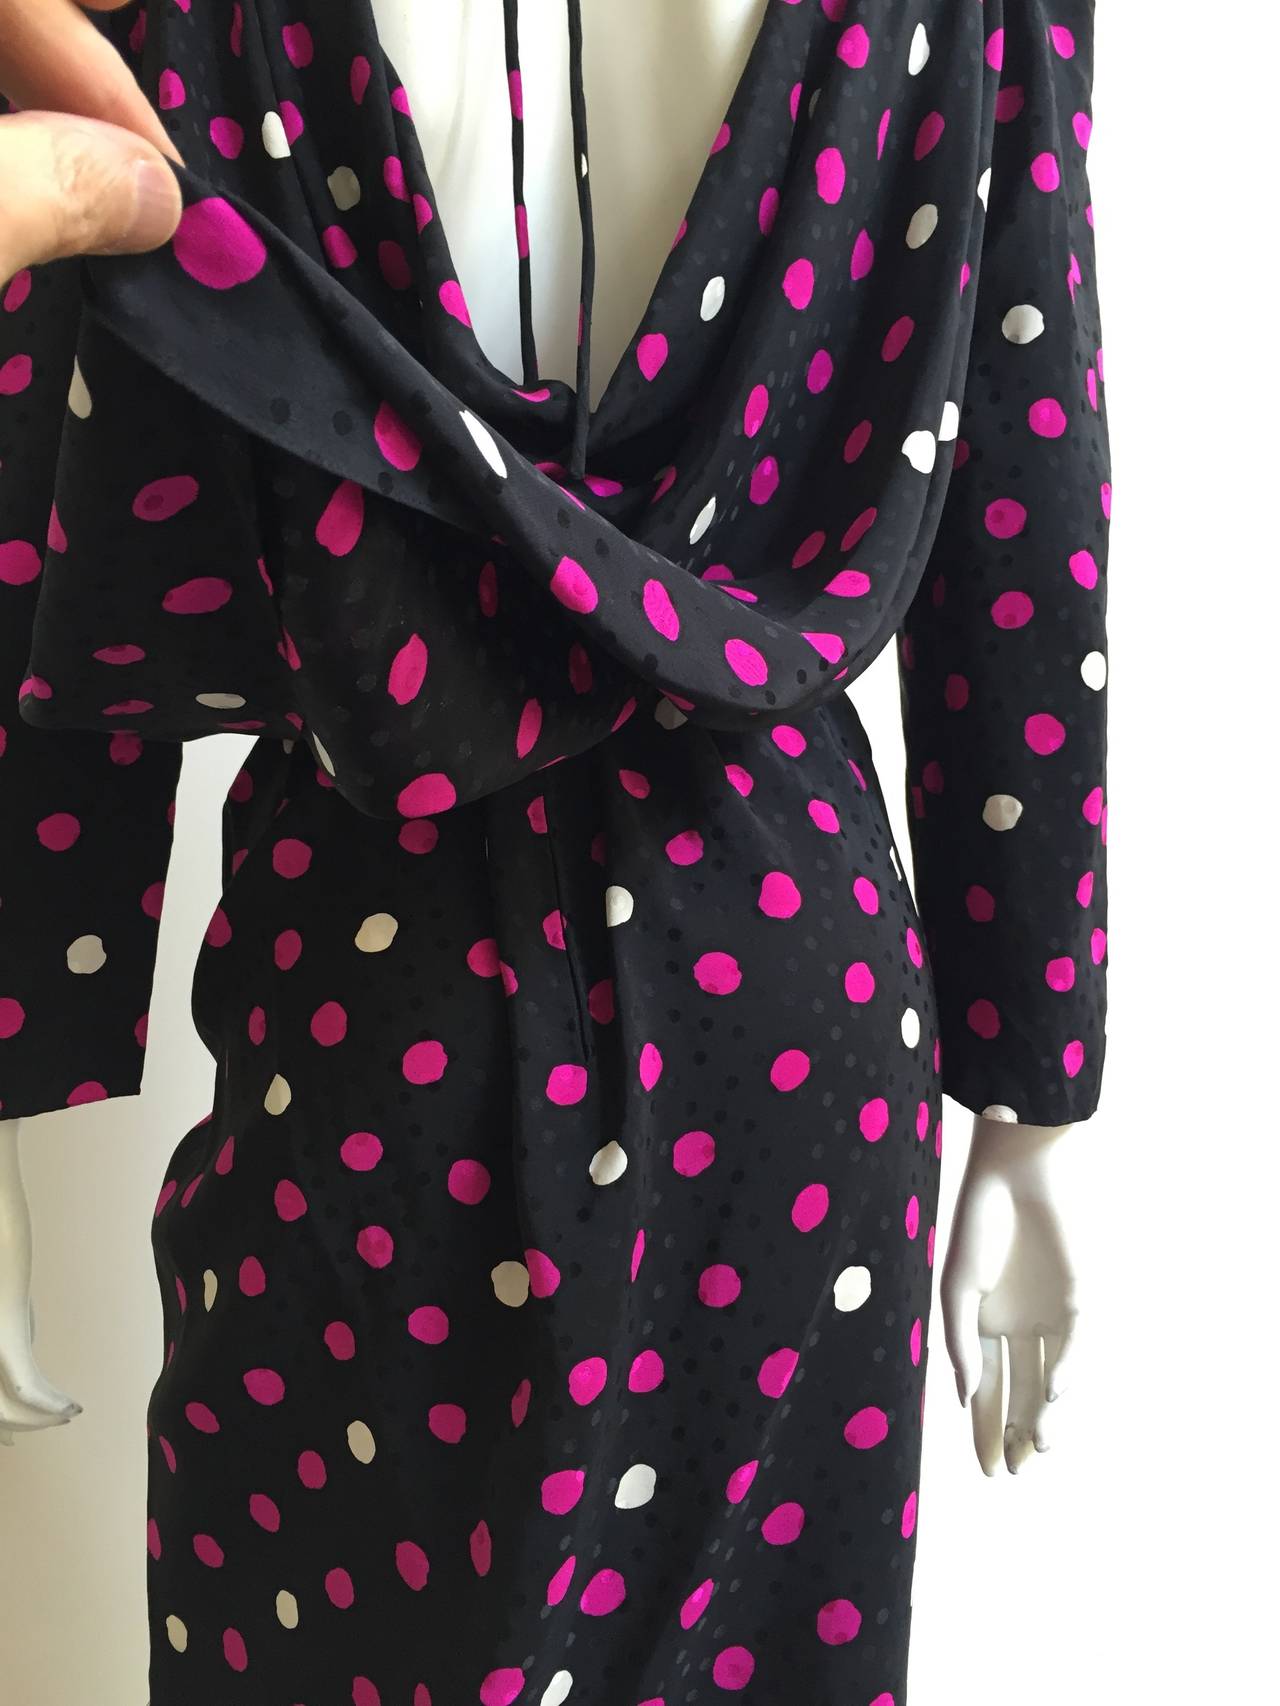 Women's Bill Blass 70s Silk Polka Dot Dress With Cape Size 8.